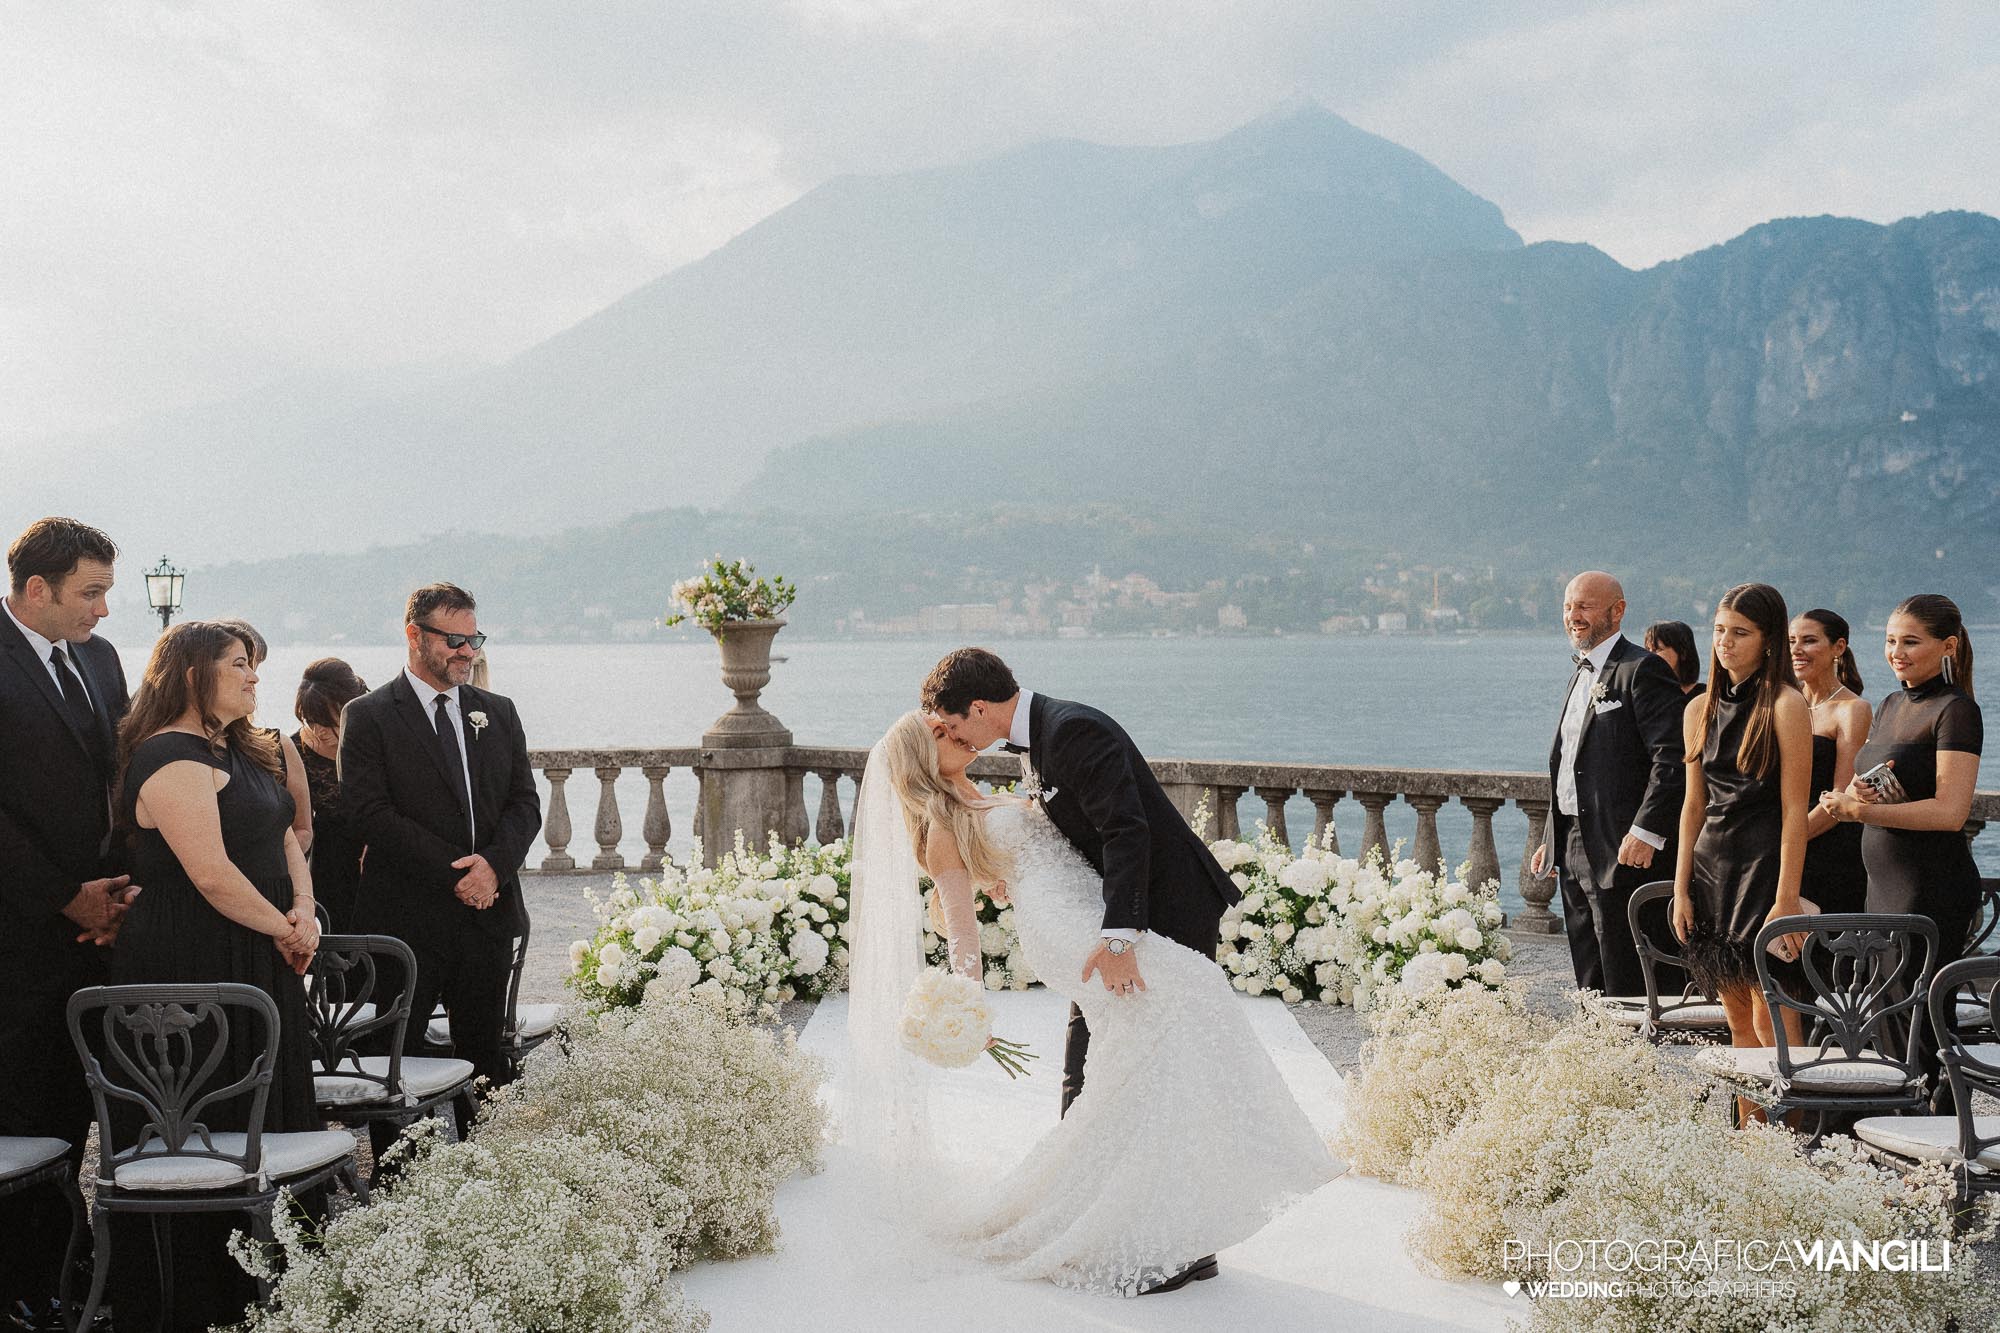 wedding photo villa serbelloni bellagio como lake london dylan 073